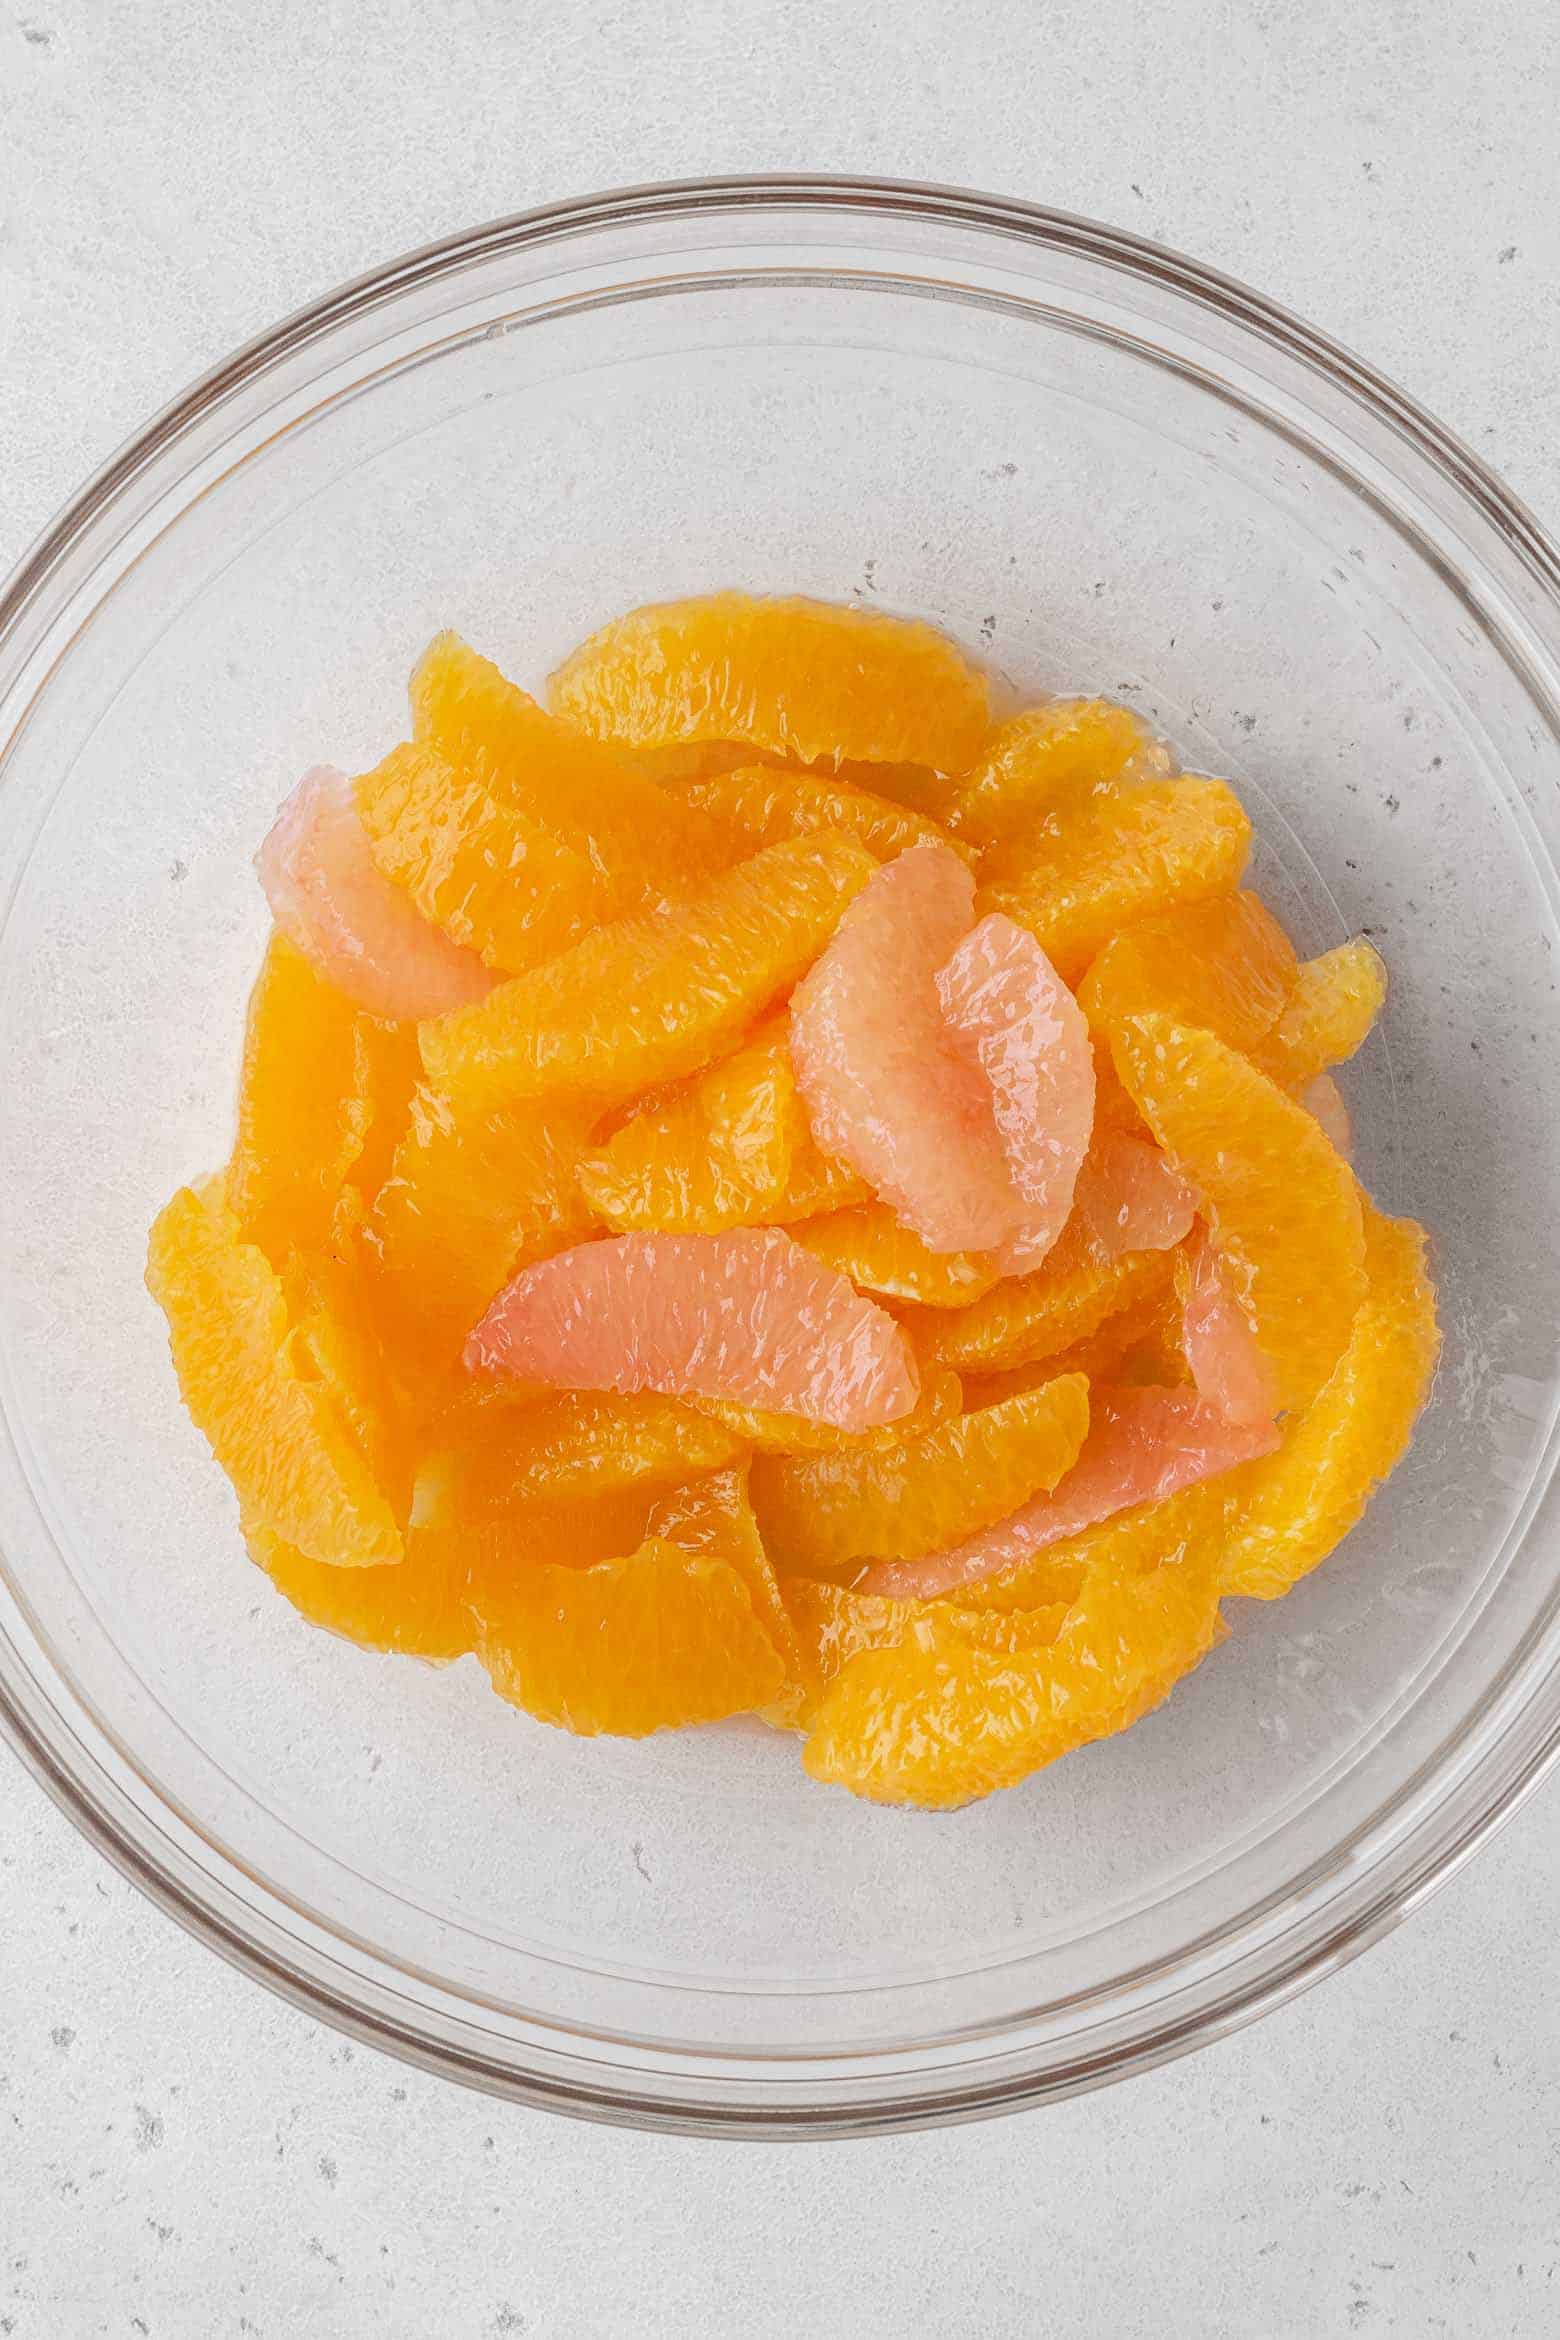 Orange segments in a glass bowl